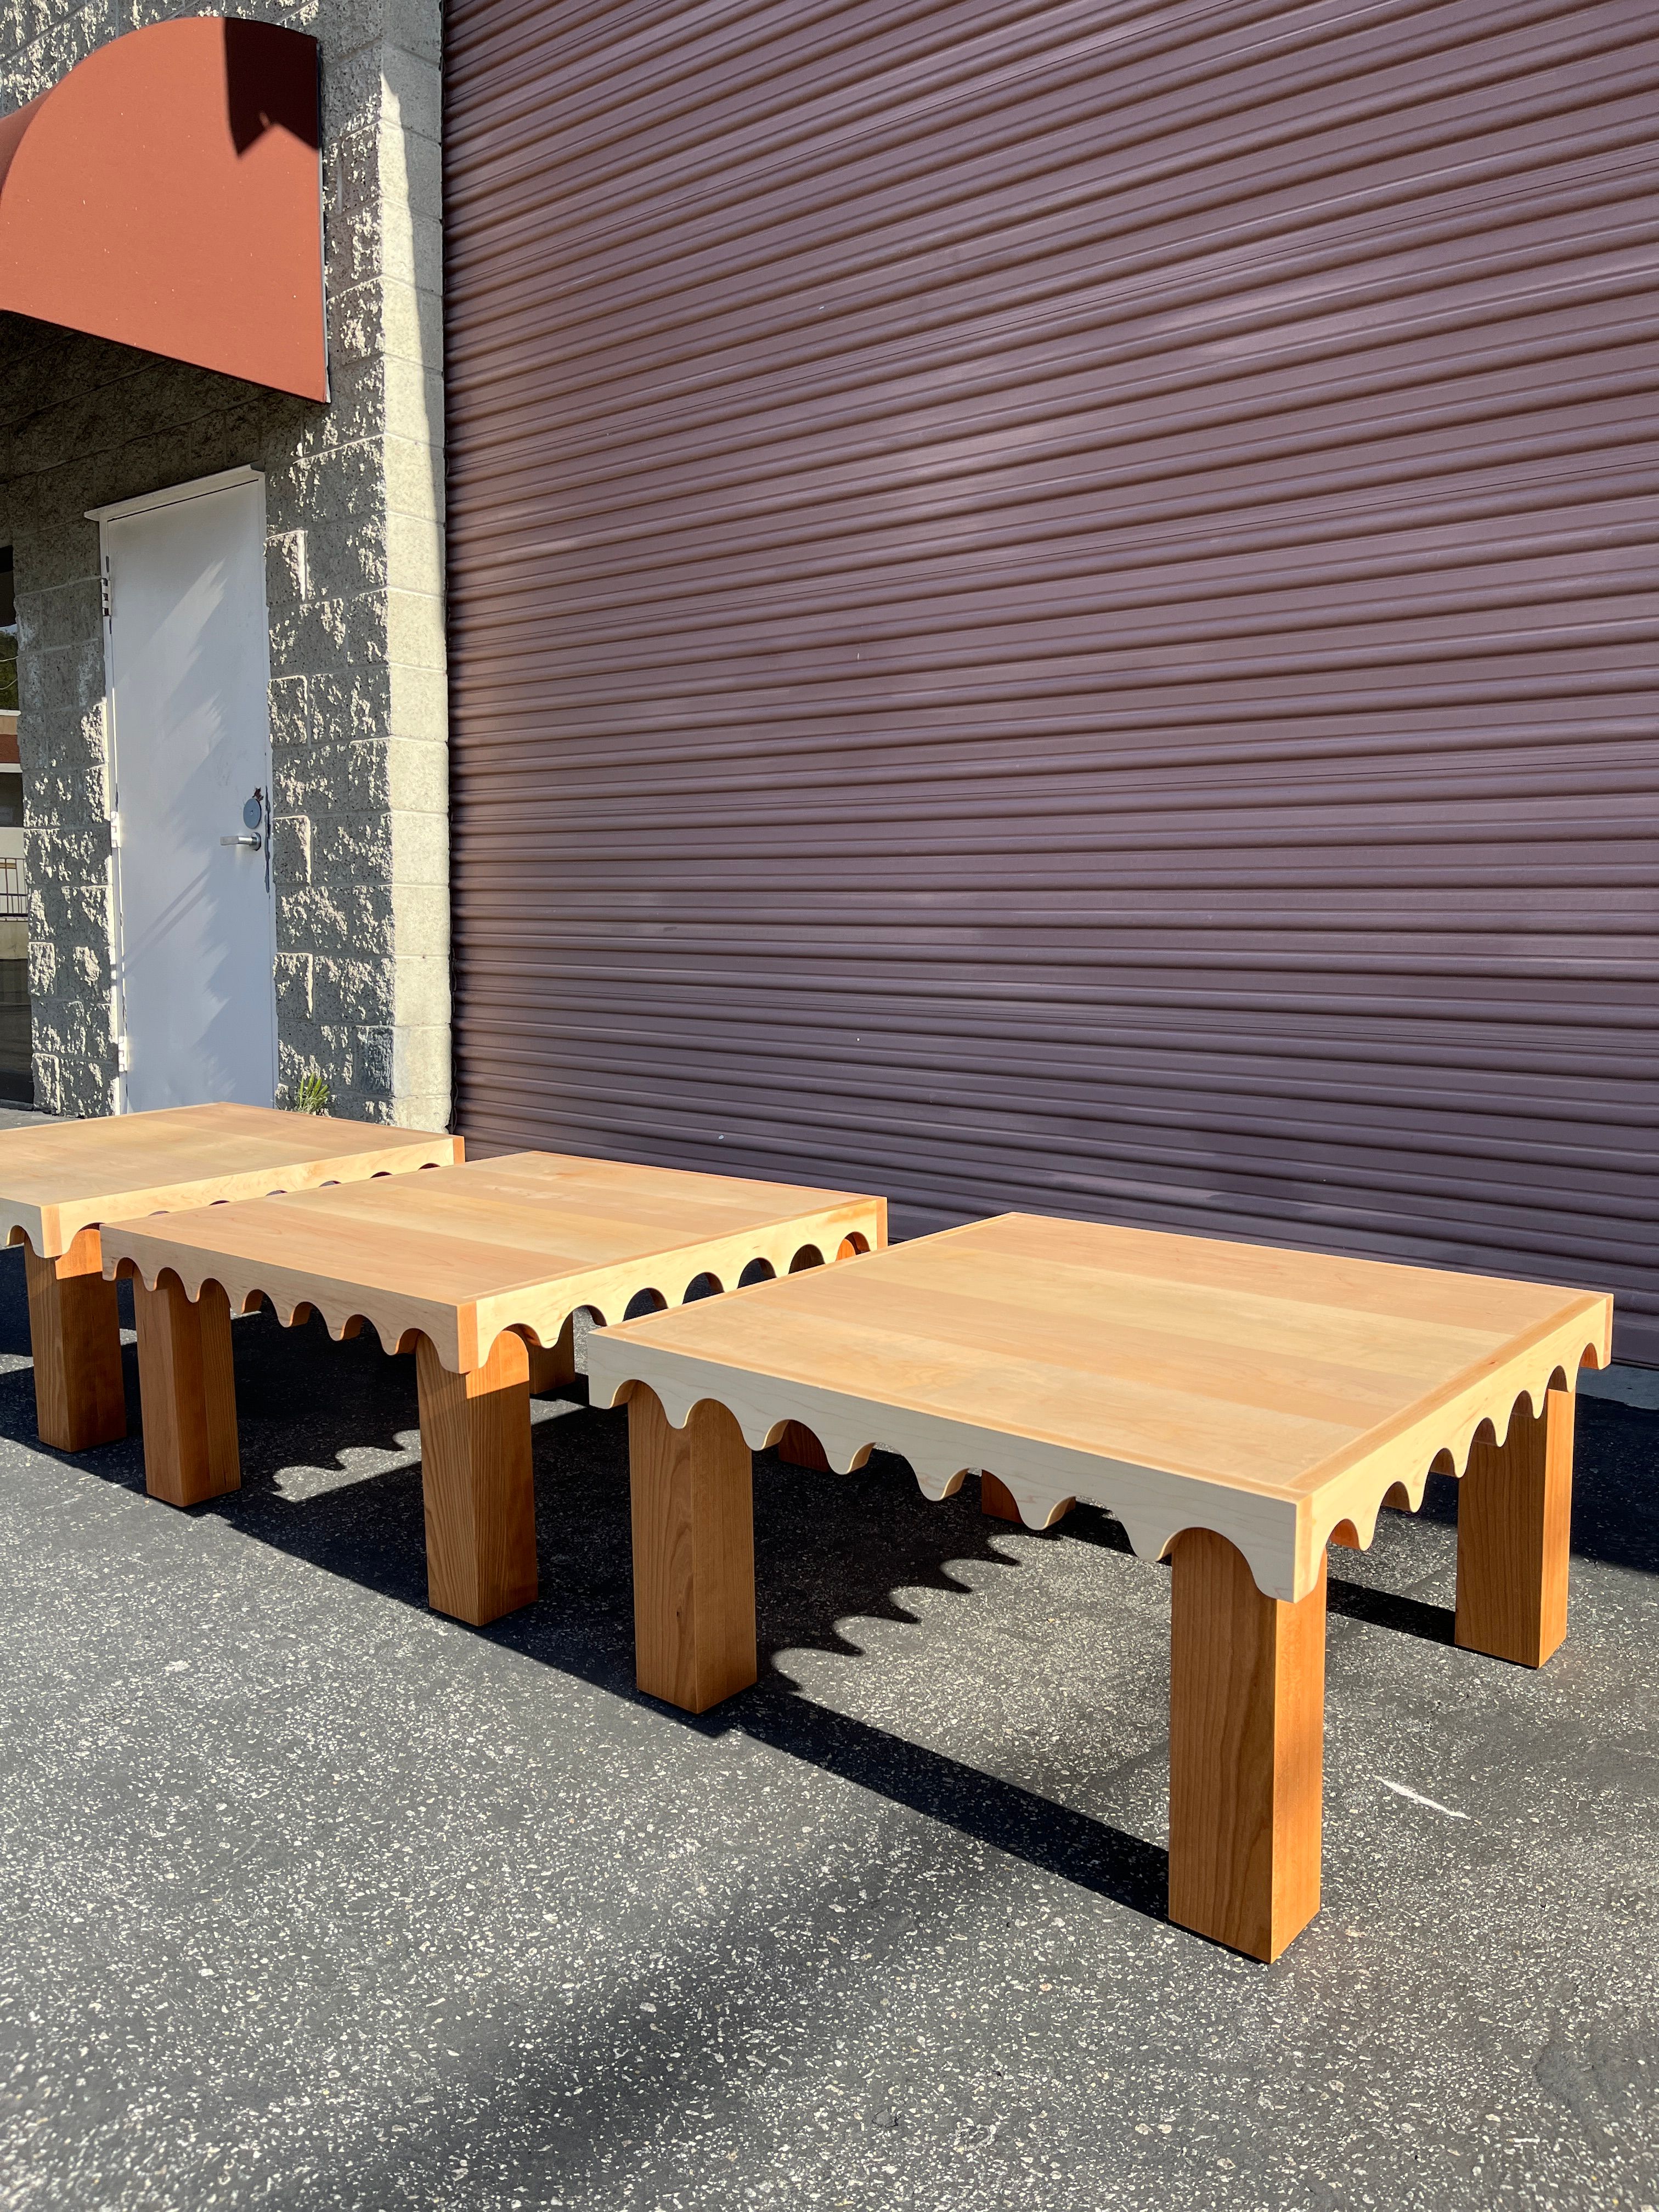  Scallop Tables - Laun Studio product image 1